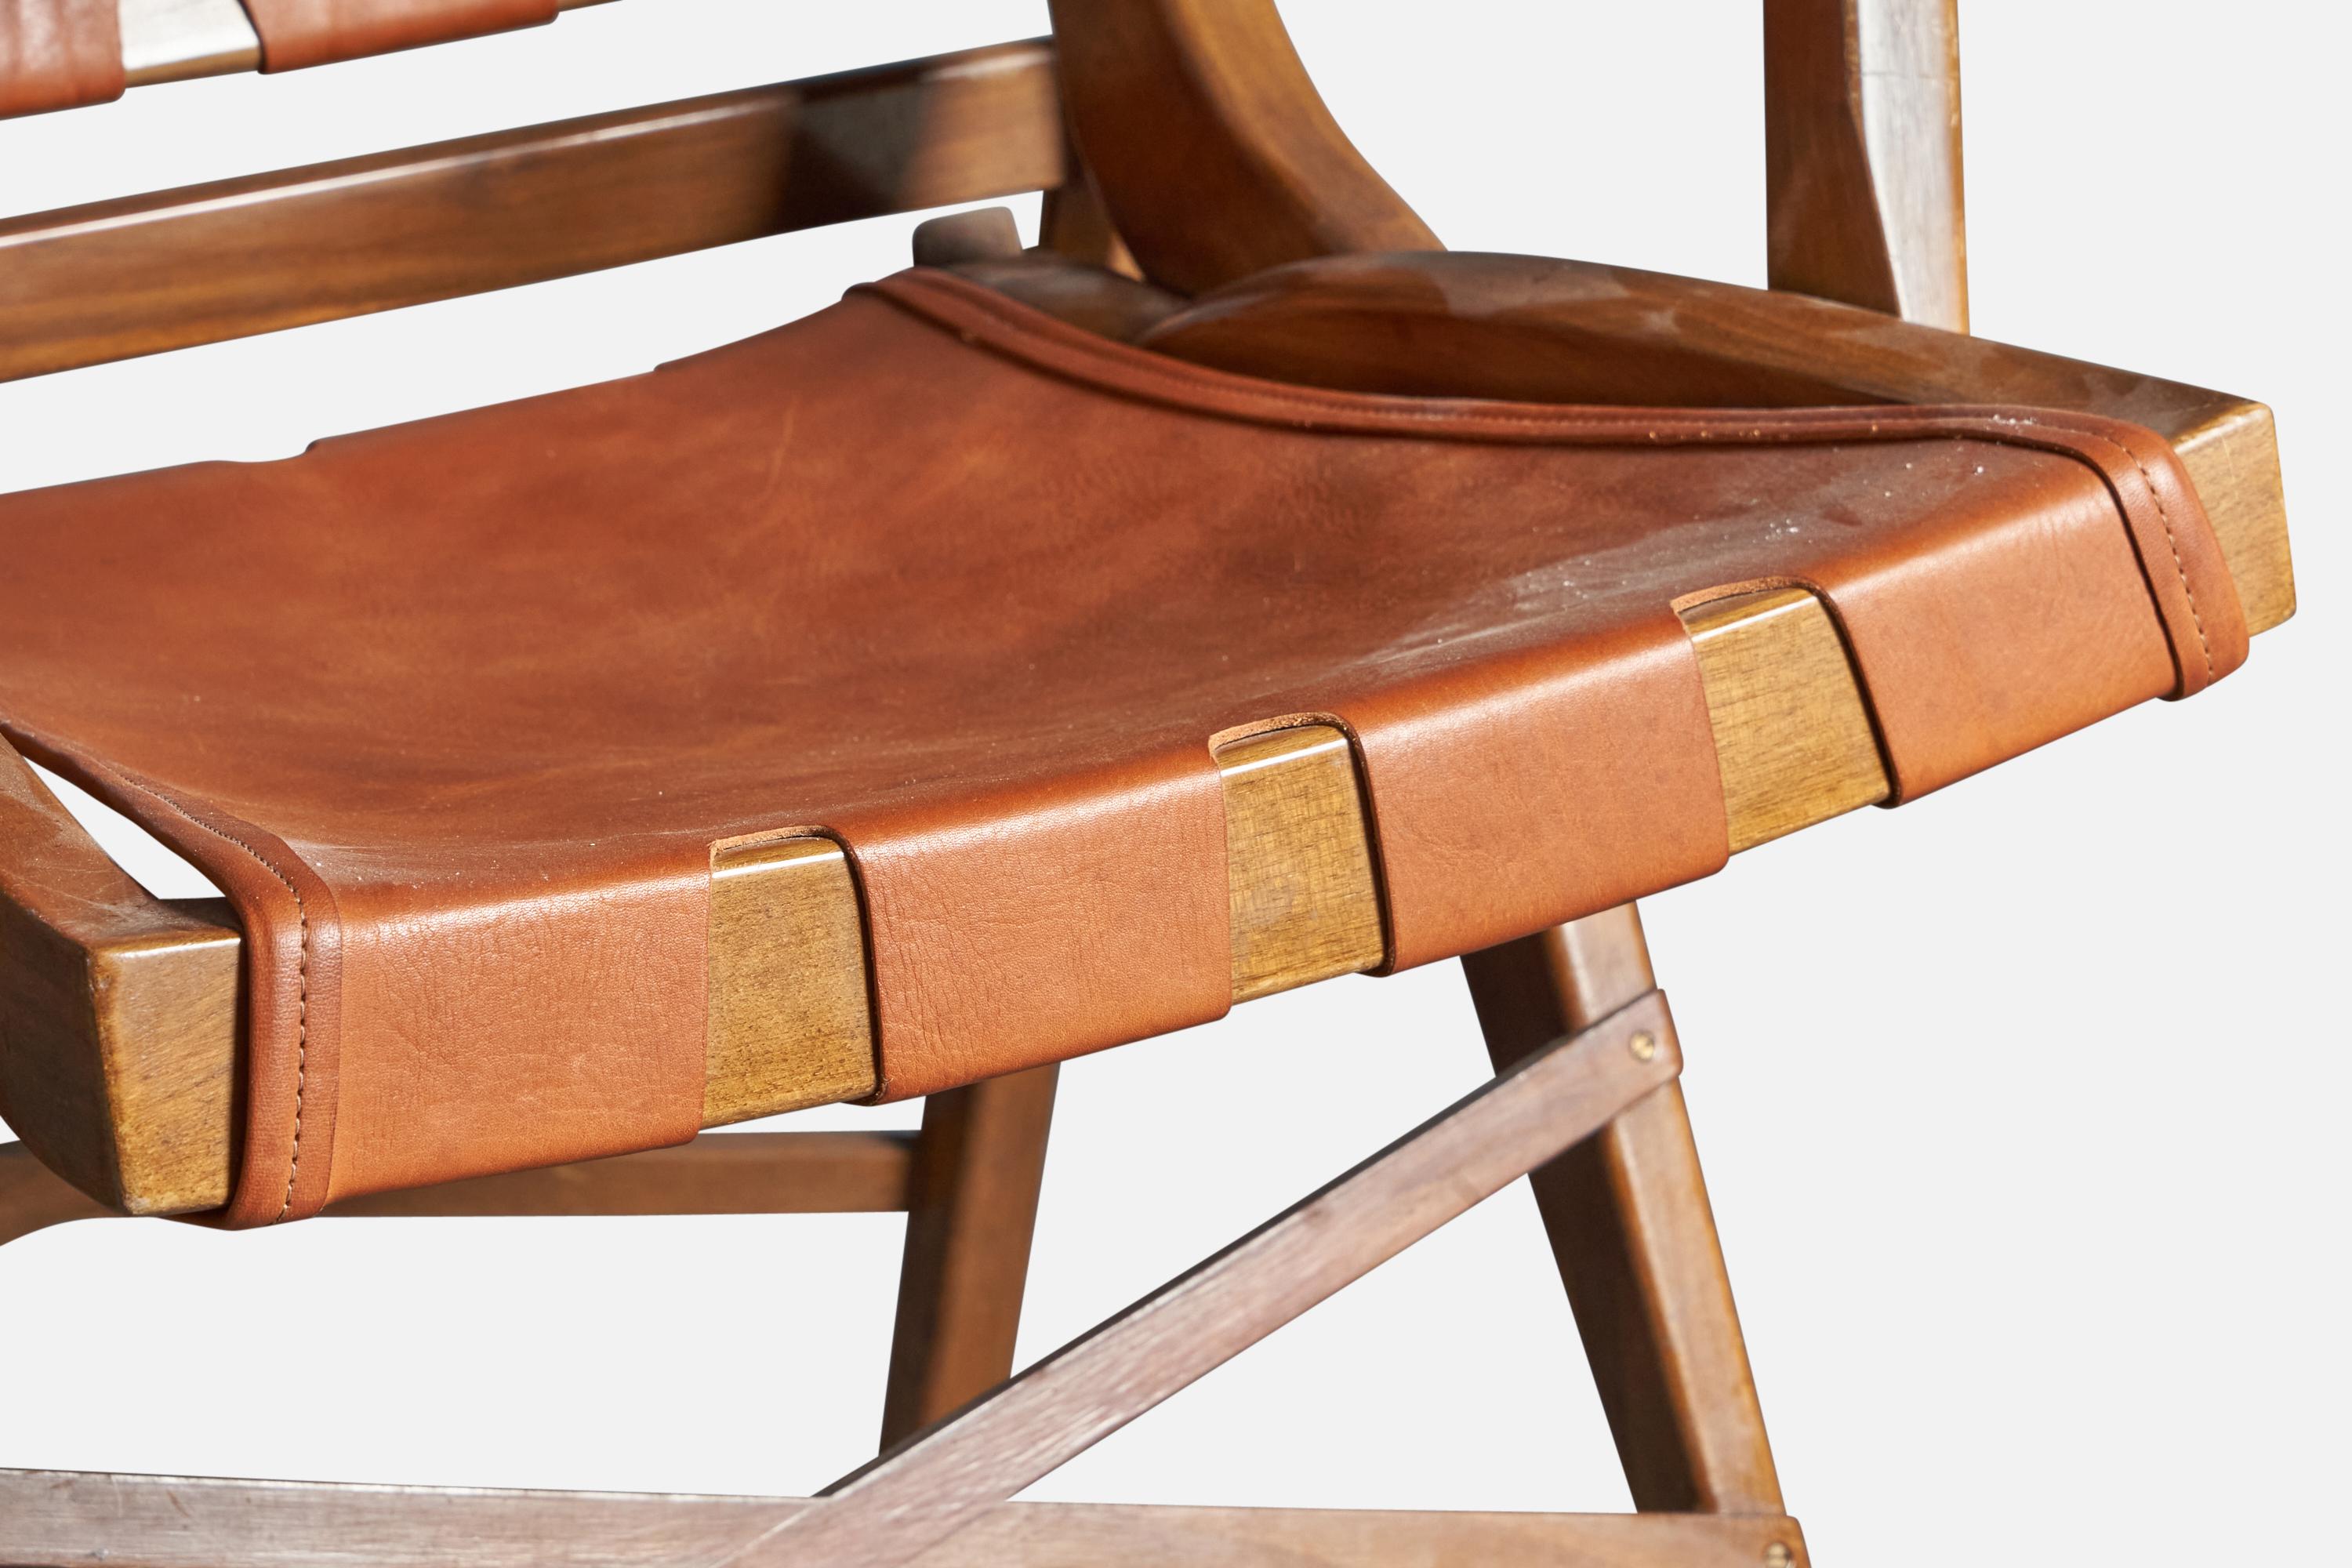 Italian Guglielmo Pecorini, Folding Arm Chairs, Walnut, Leather, Italy, 1940s For Sale